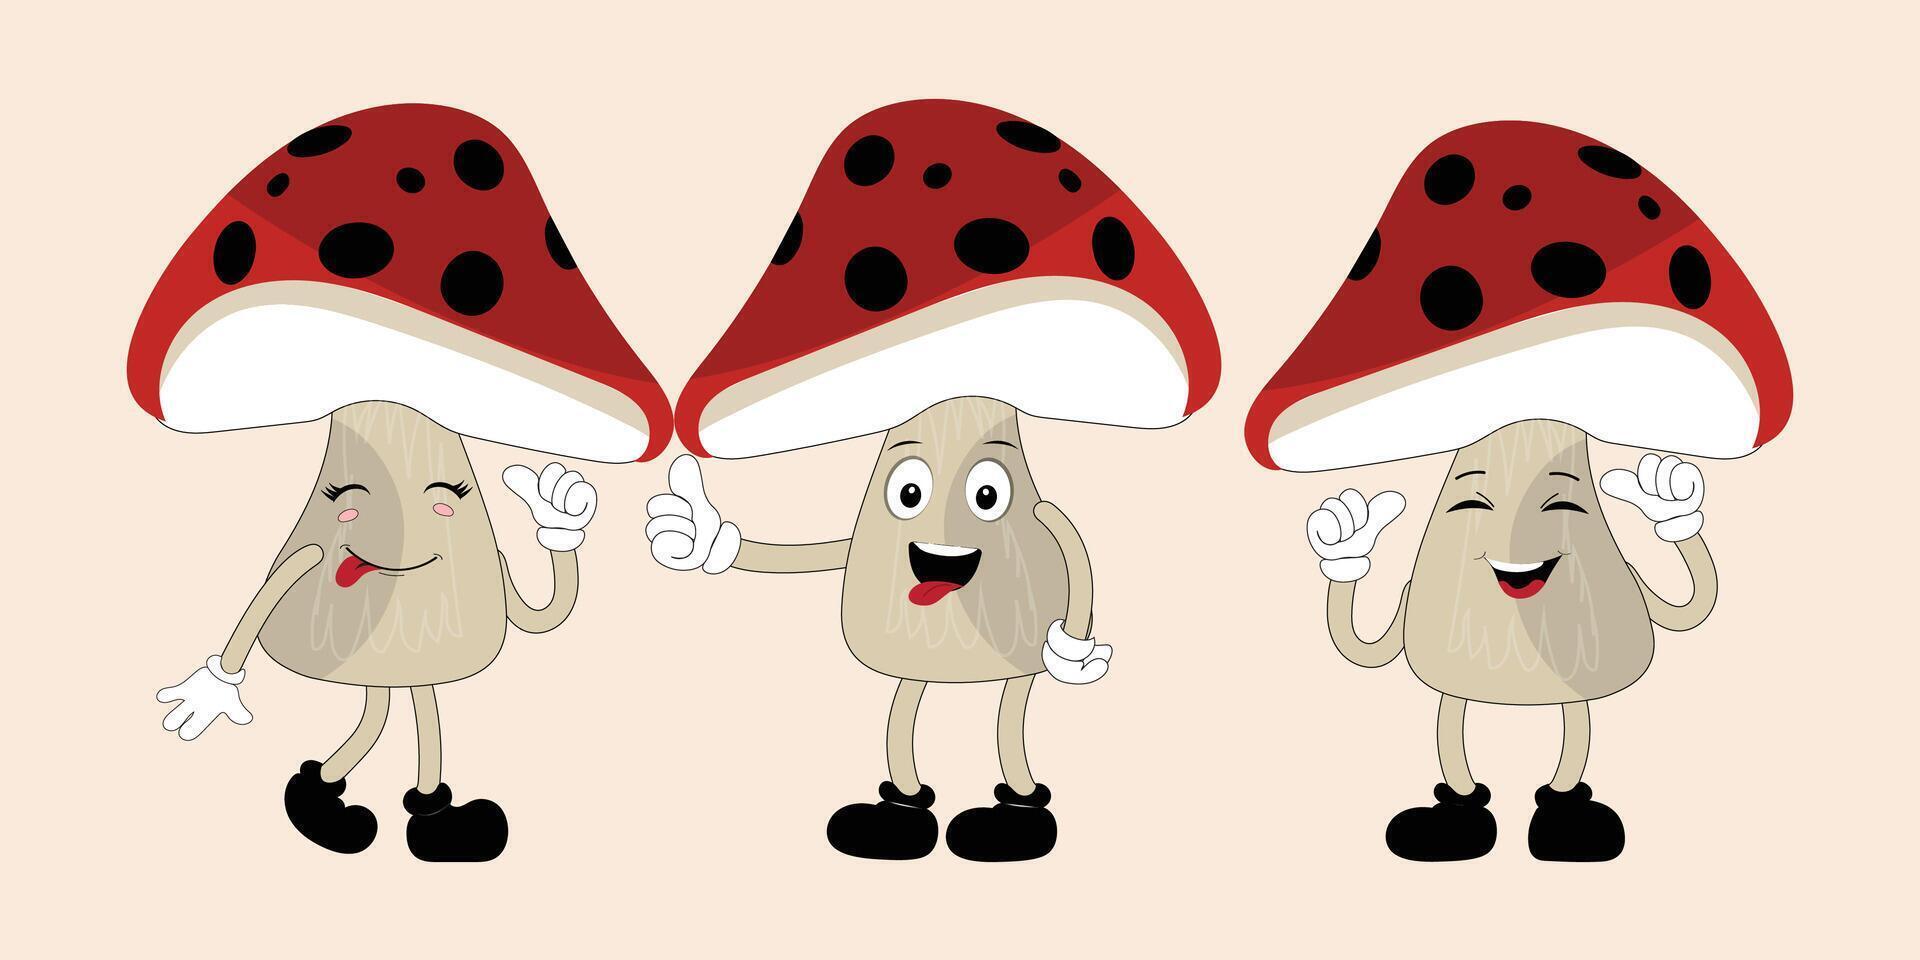 Mushroom character design different expression in vintage style, Kawaii mushroom cartoon mascot character vector illustration. Eps 10